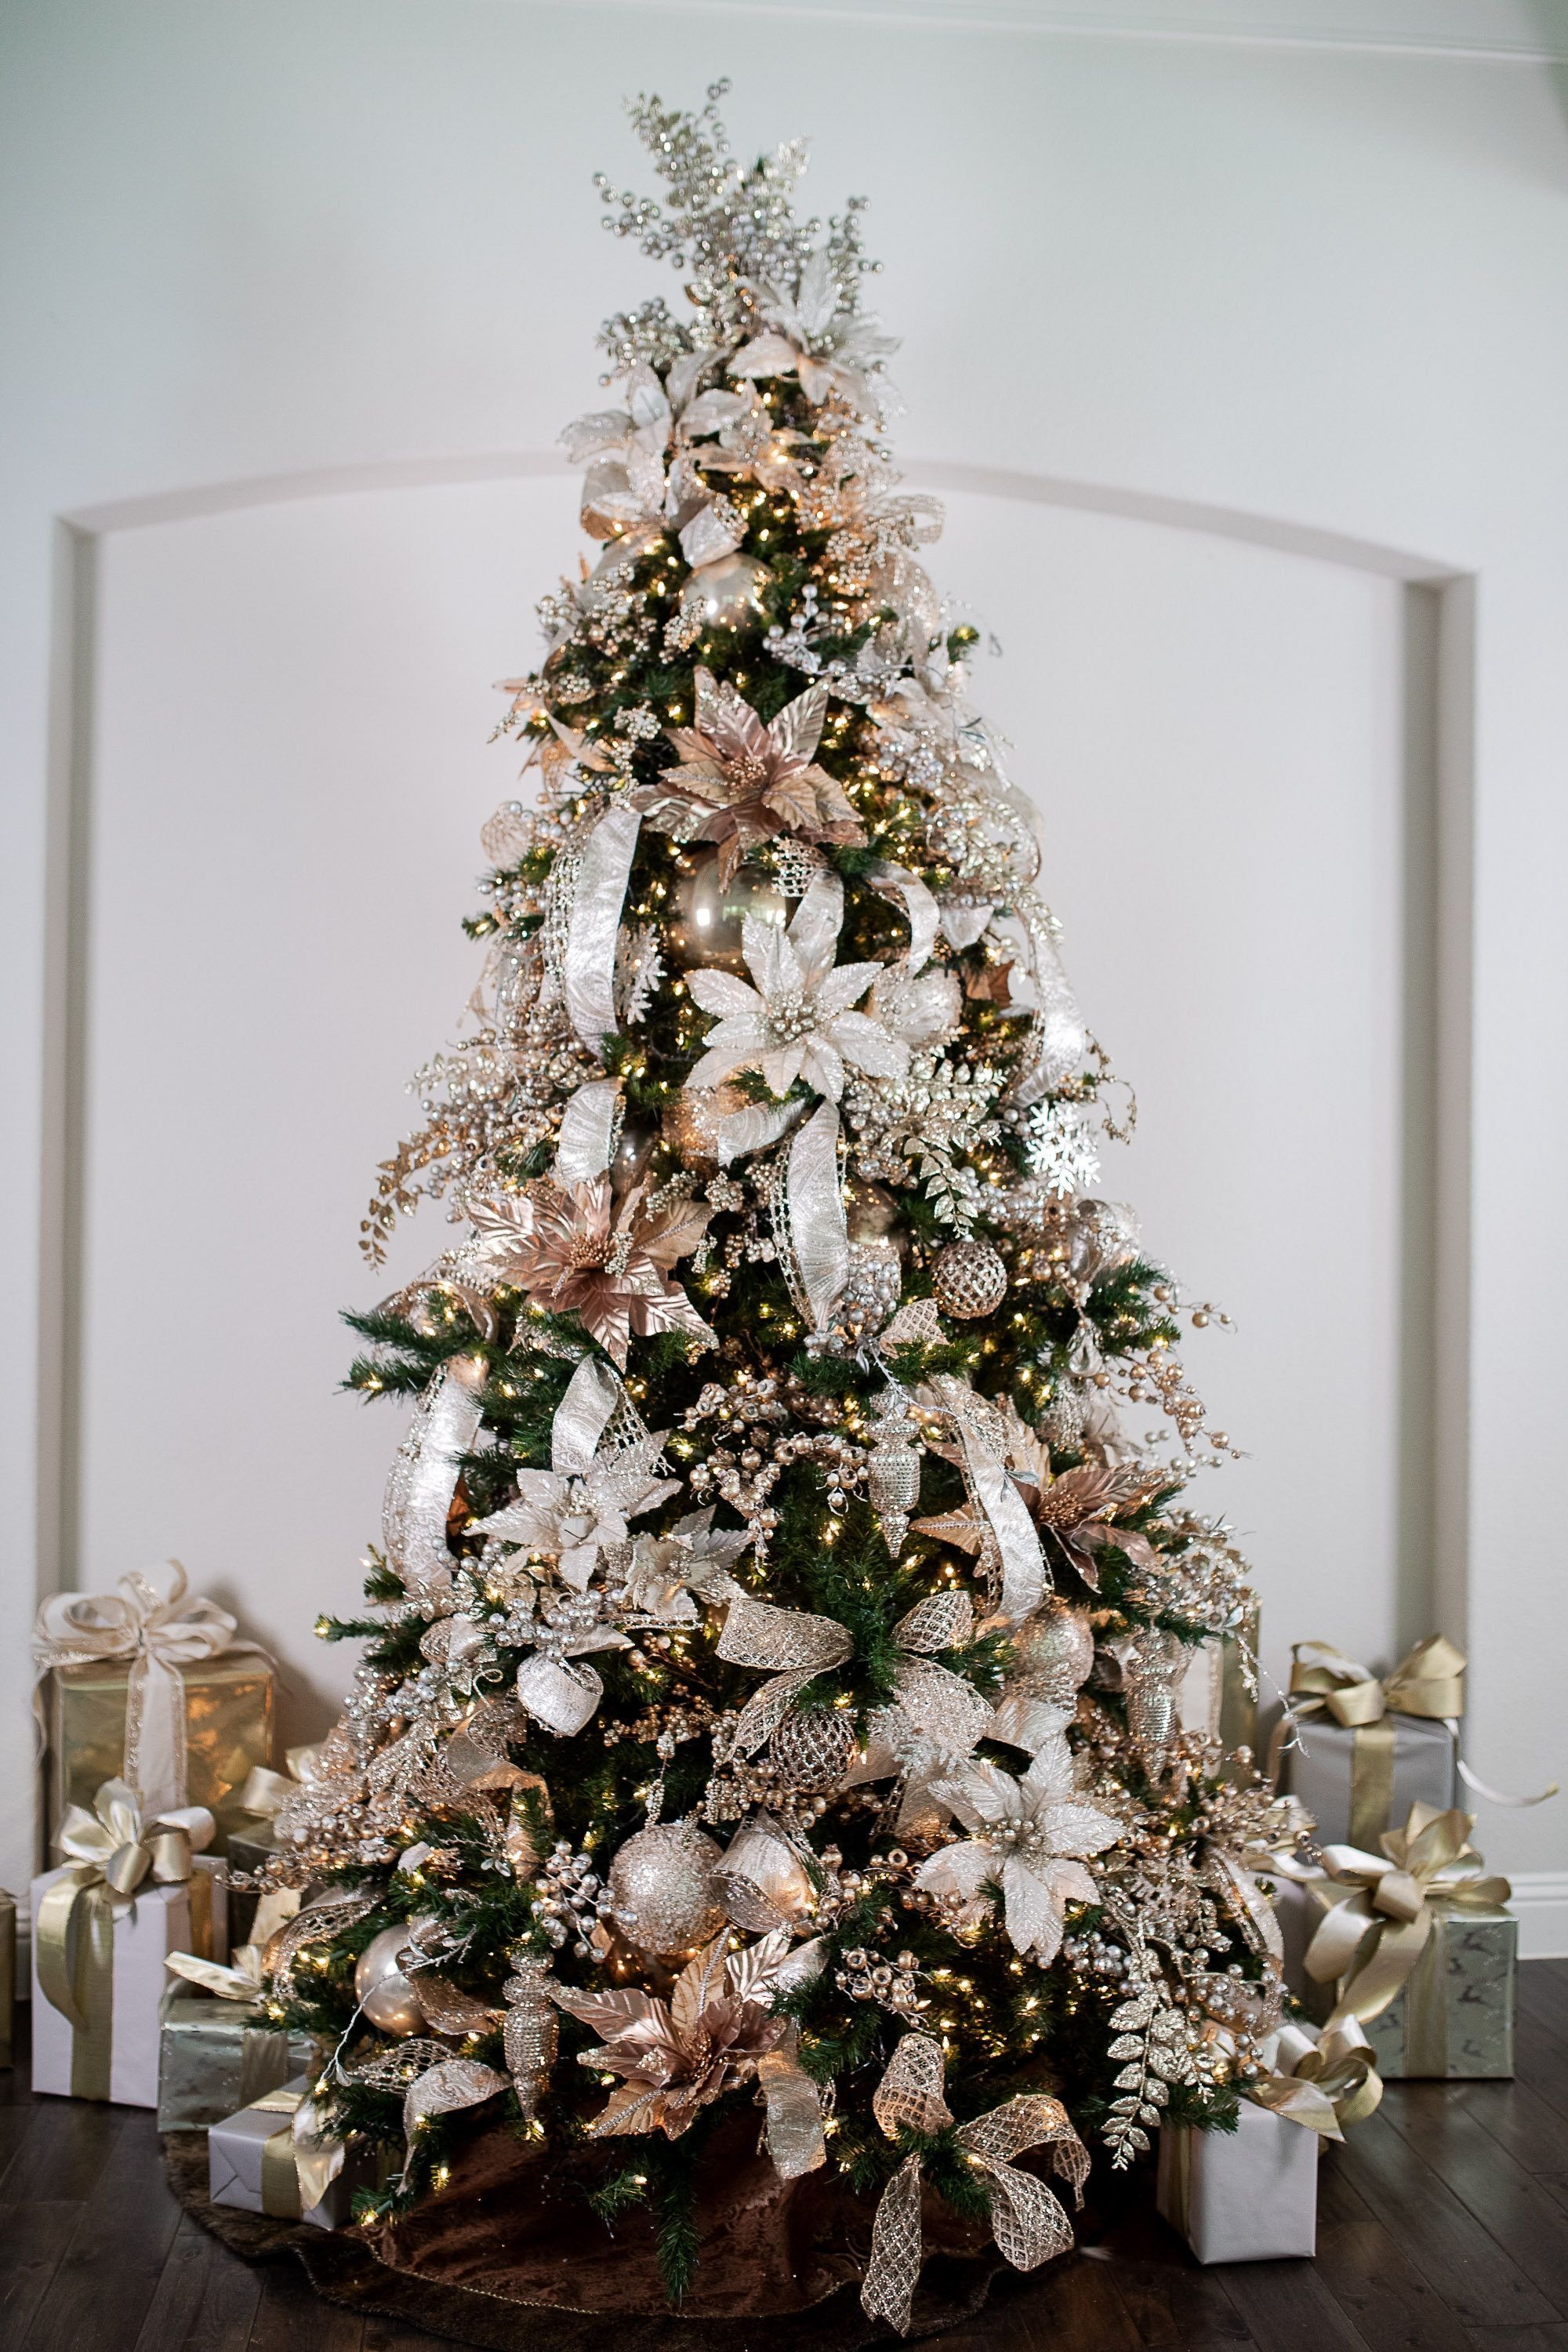 How To Theme Your Christmas Tree -   19 christmas tree themes 2020 ideas